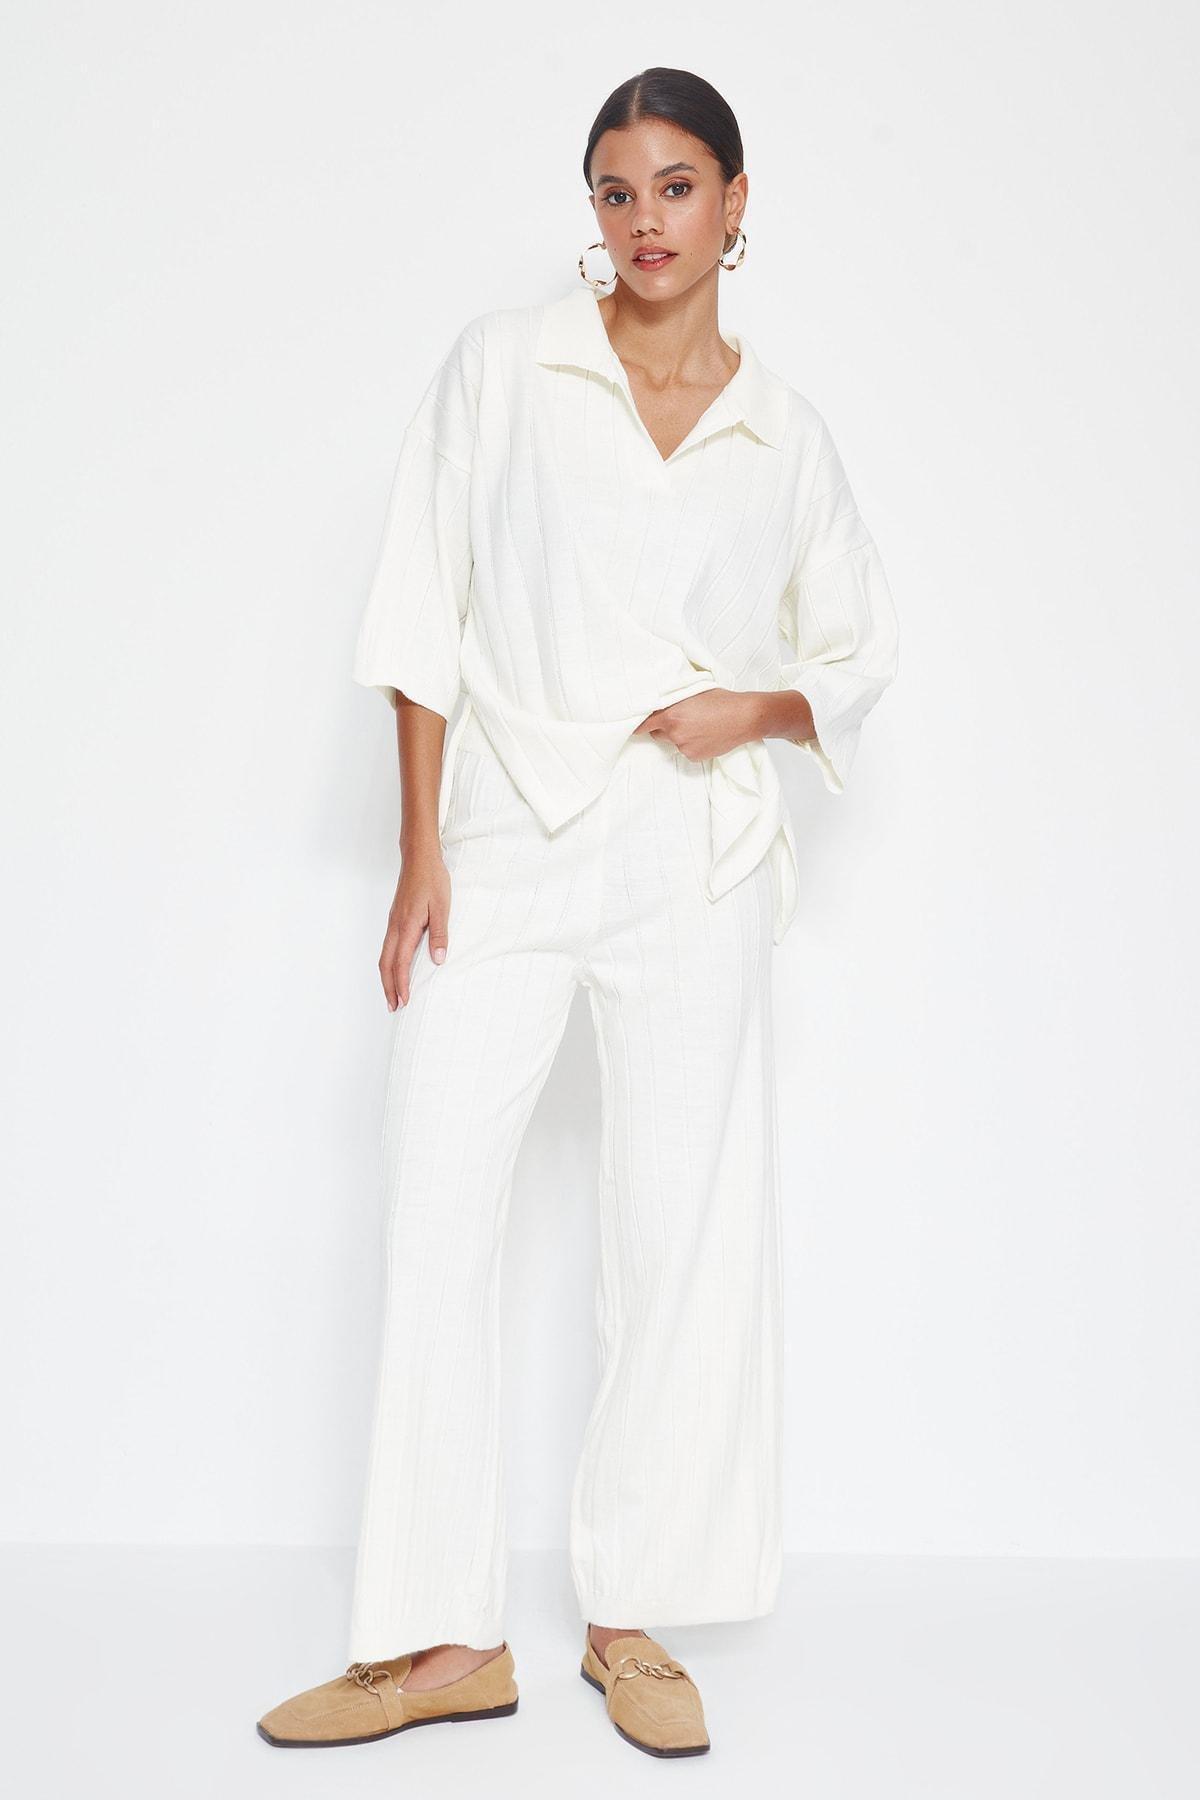 Trendyol - White Corded Knitwear Pyjamas Set